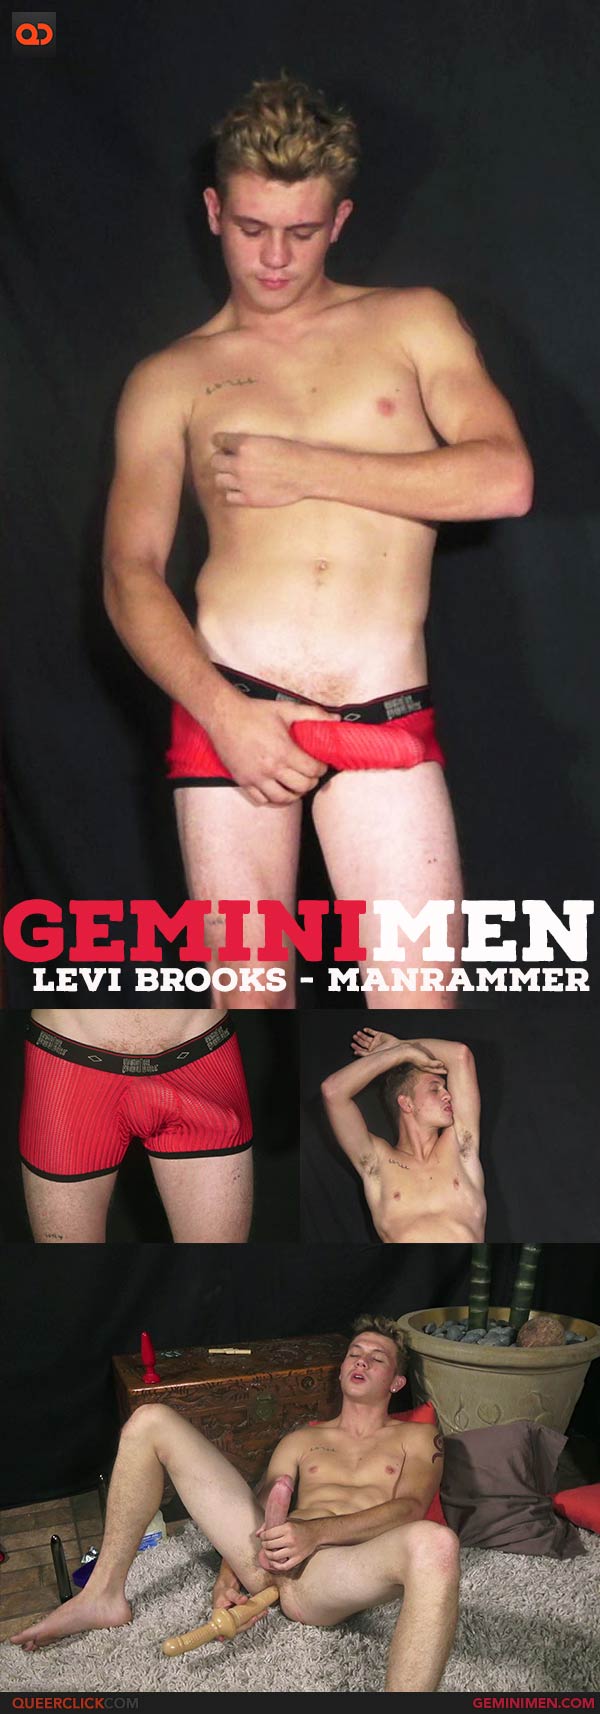 Gemini Men: Levi Brooks - ManRammer